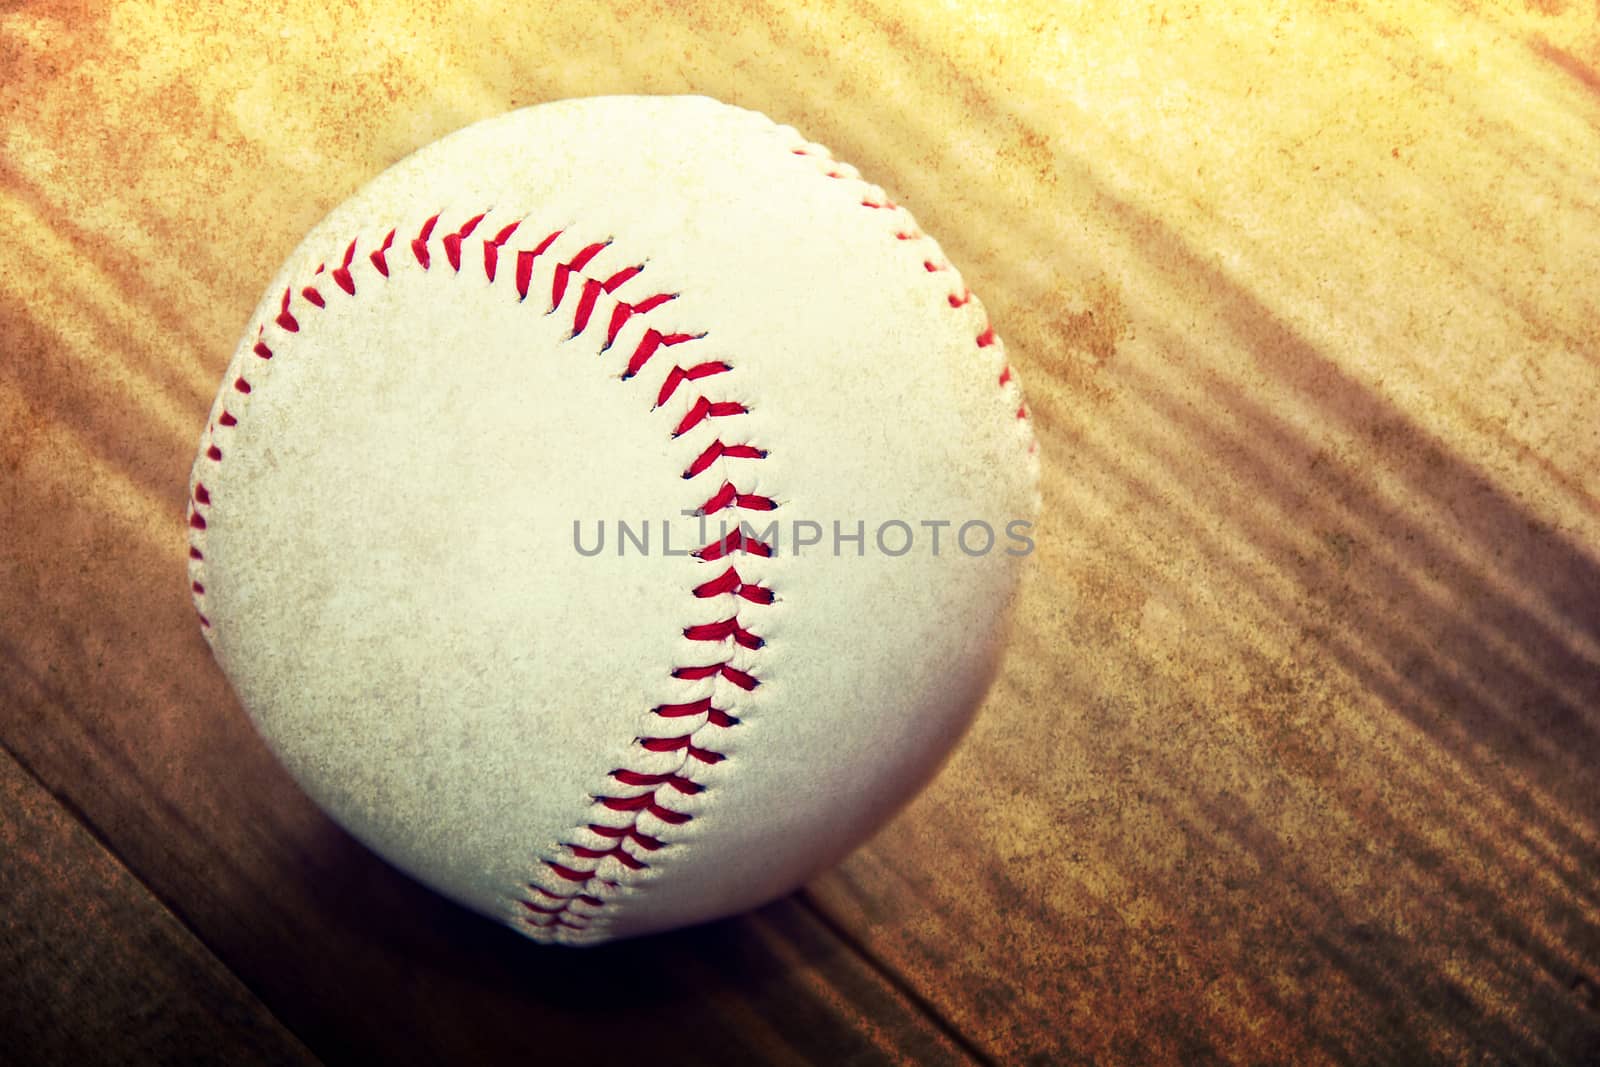 Baseball game. Baseball ball on wooden background. Grunge picture.